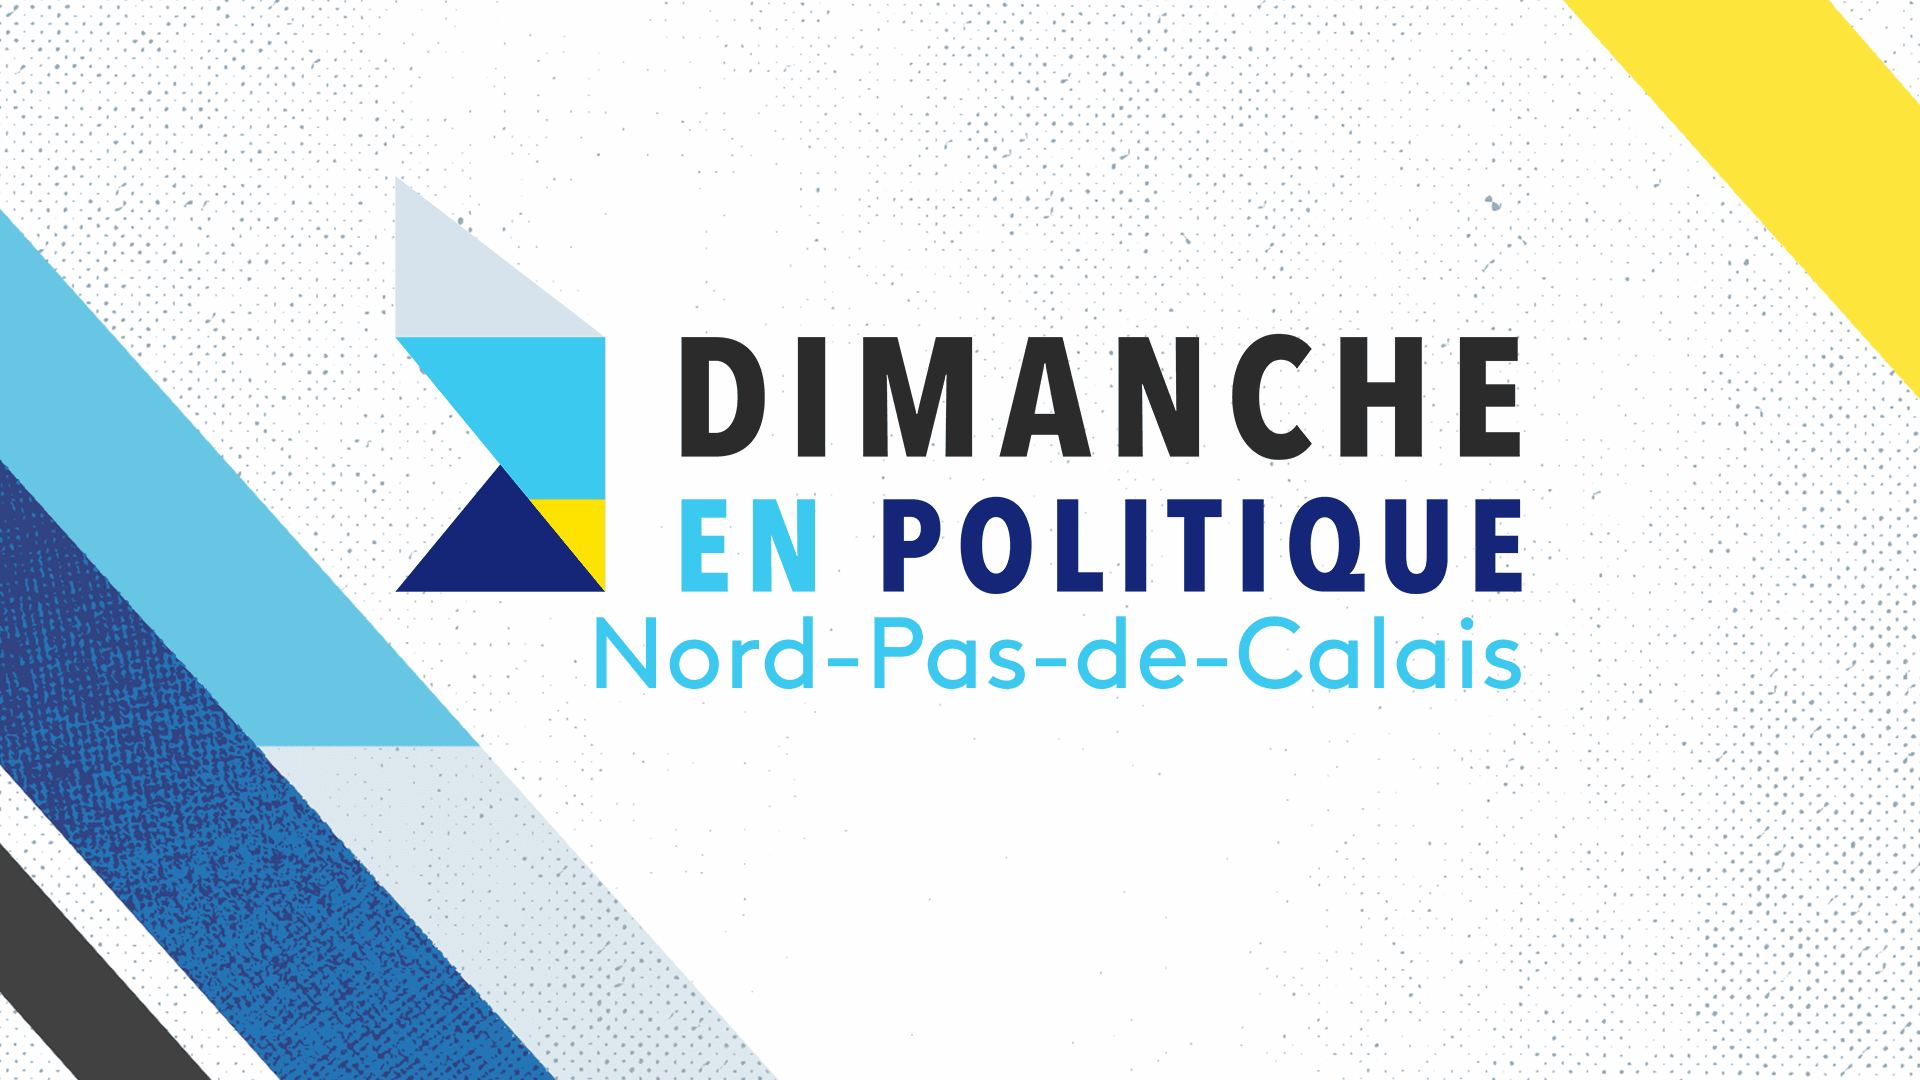 Dimanche en politique - Nord-Pas-de-Calais